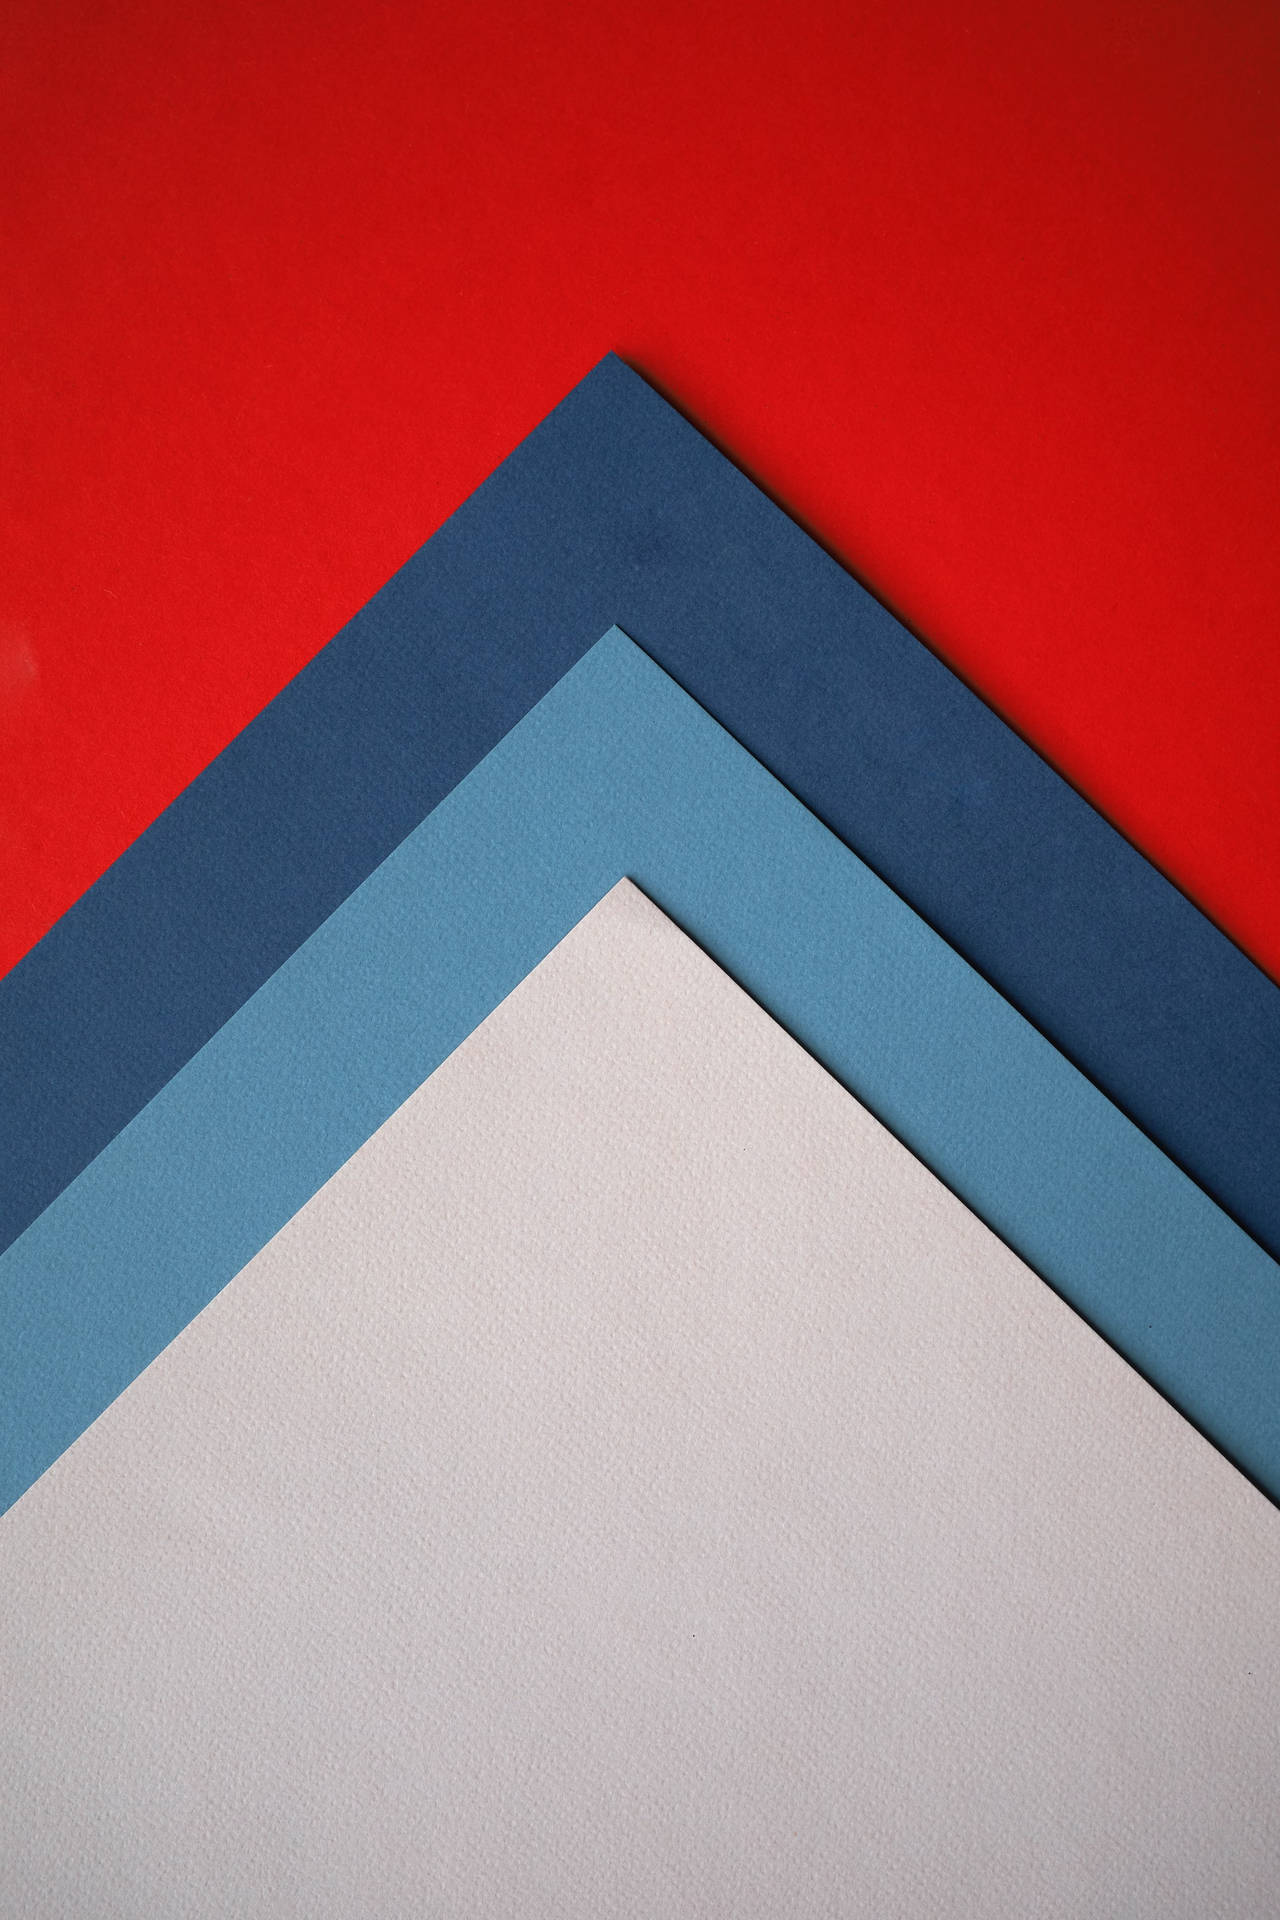 Dreieckegeschichteter Tipp Für Lenovo Tablet-bildschirm Wallpaper